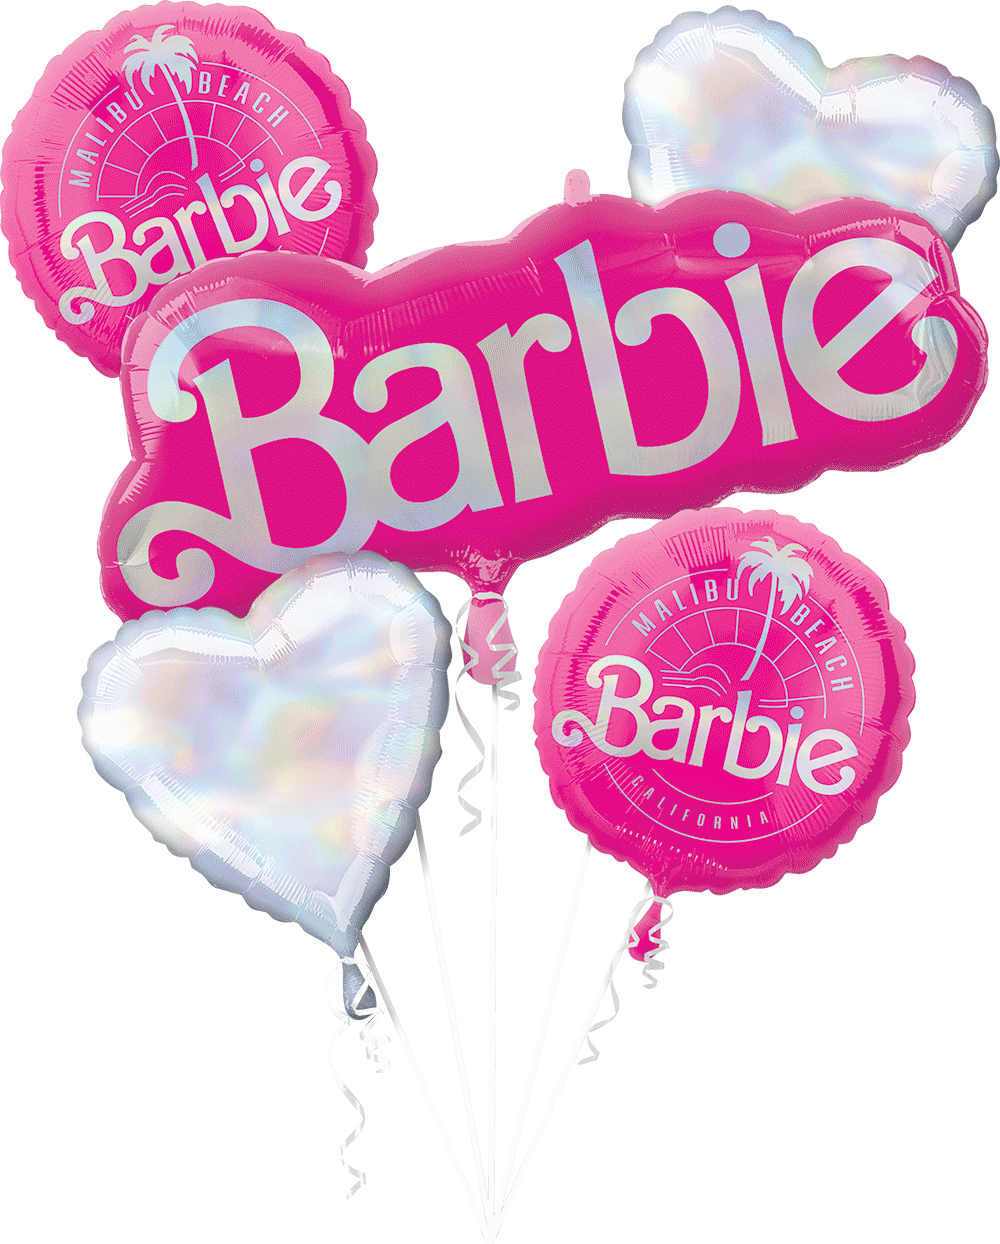 Barbie Brand